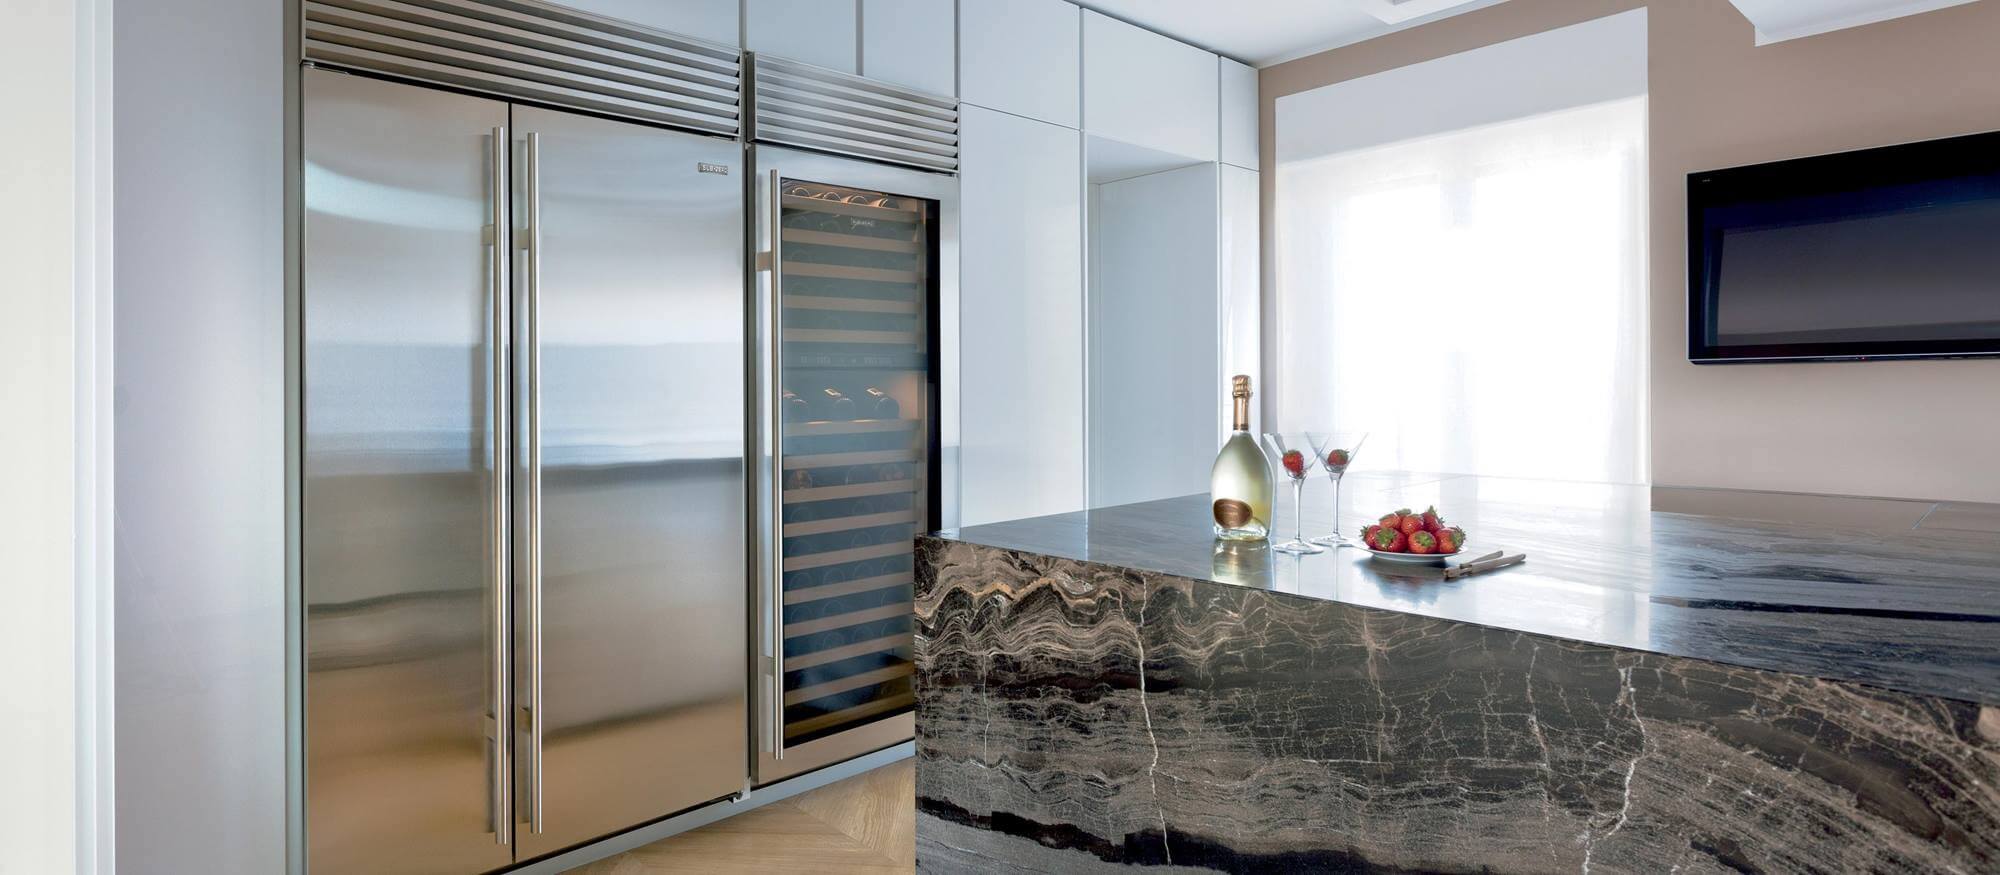 Is a Sub-Zero Refrigerator Worth the Money?